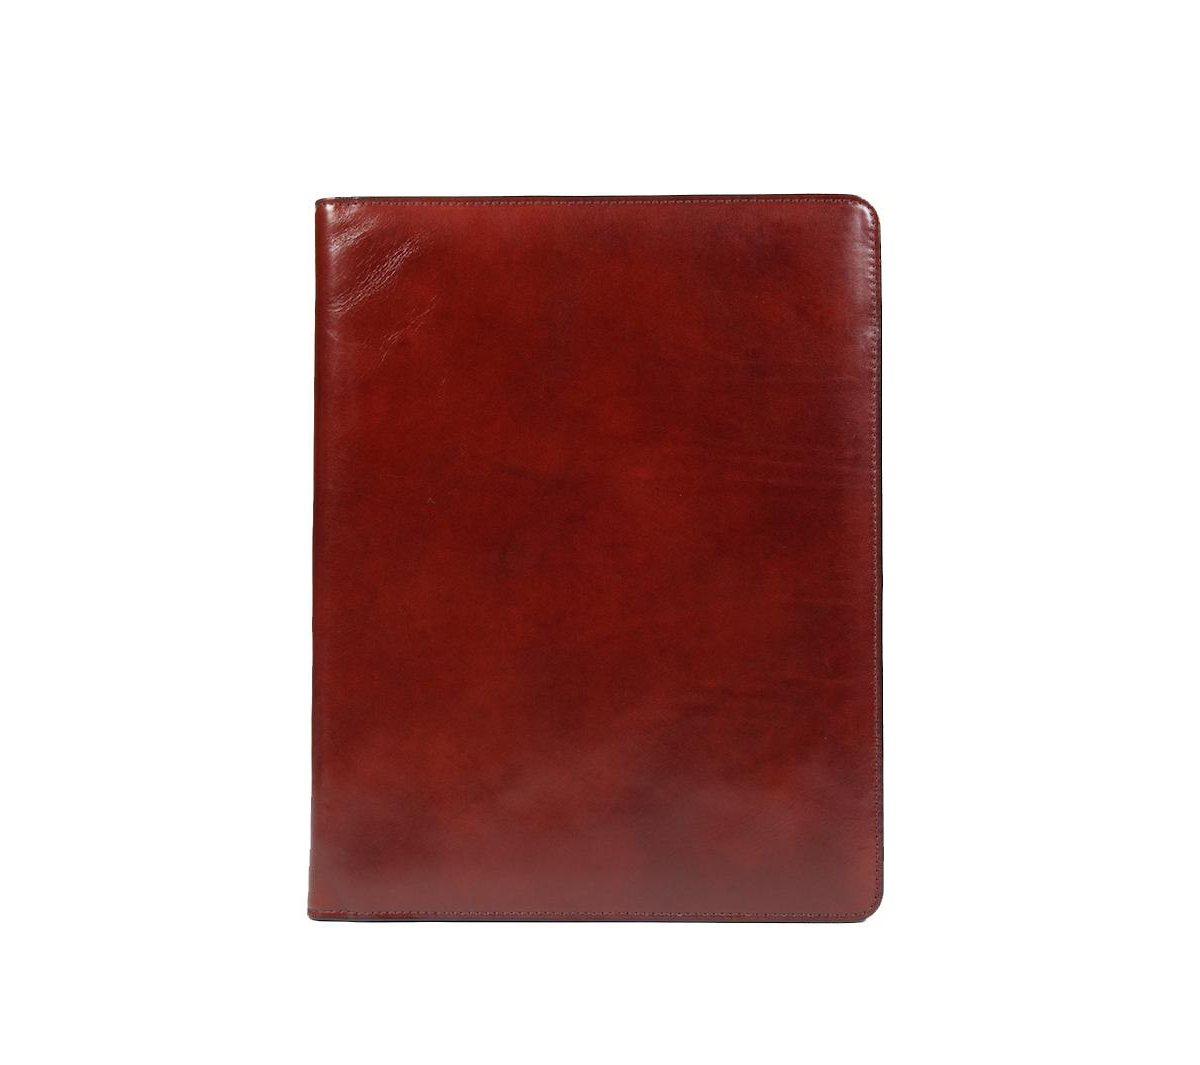 Leather Wallets / Accessories Zip Around Pad Cover - Dark brown